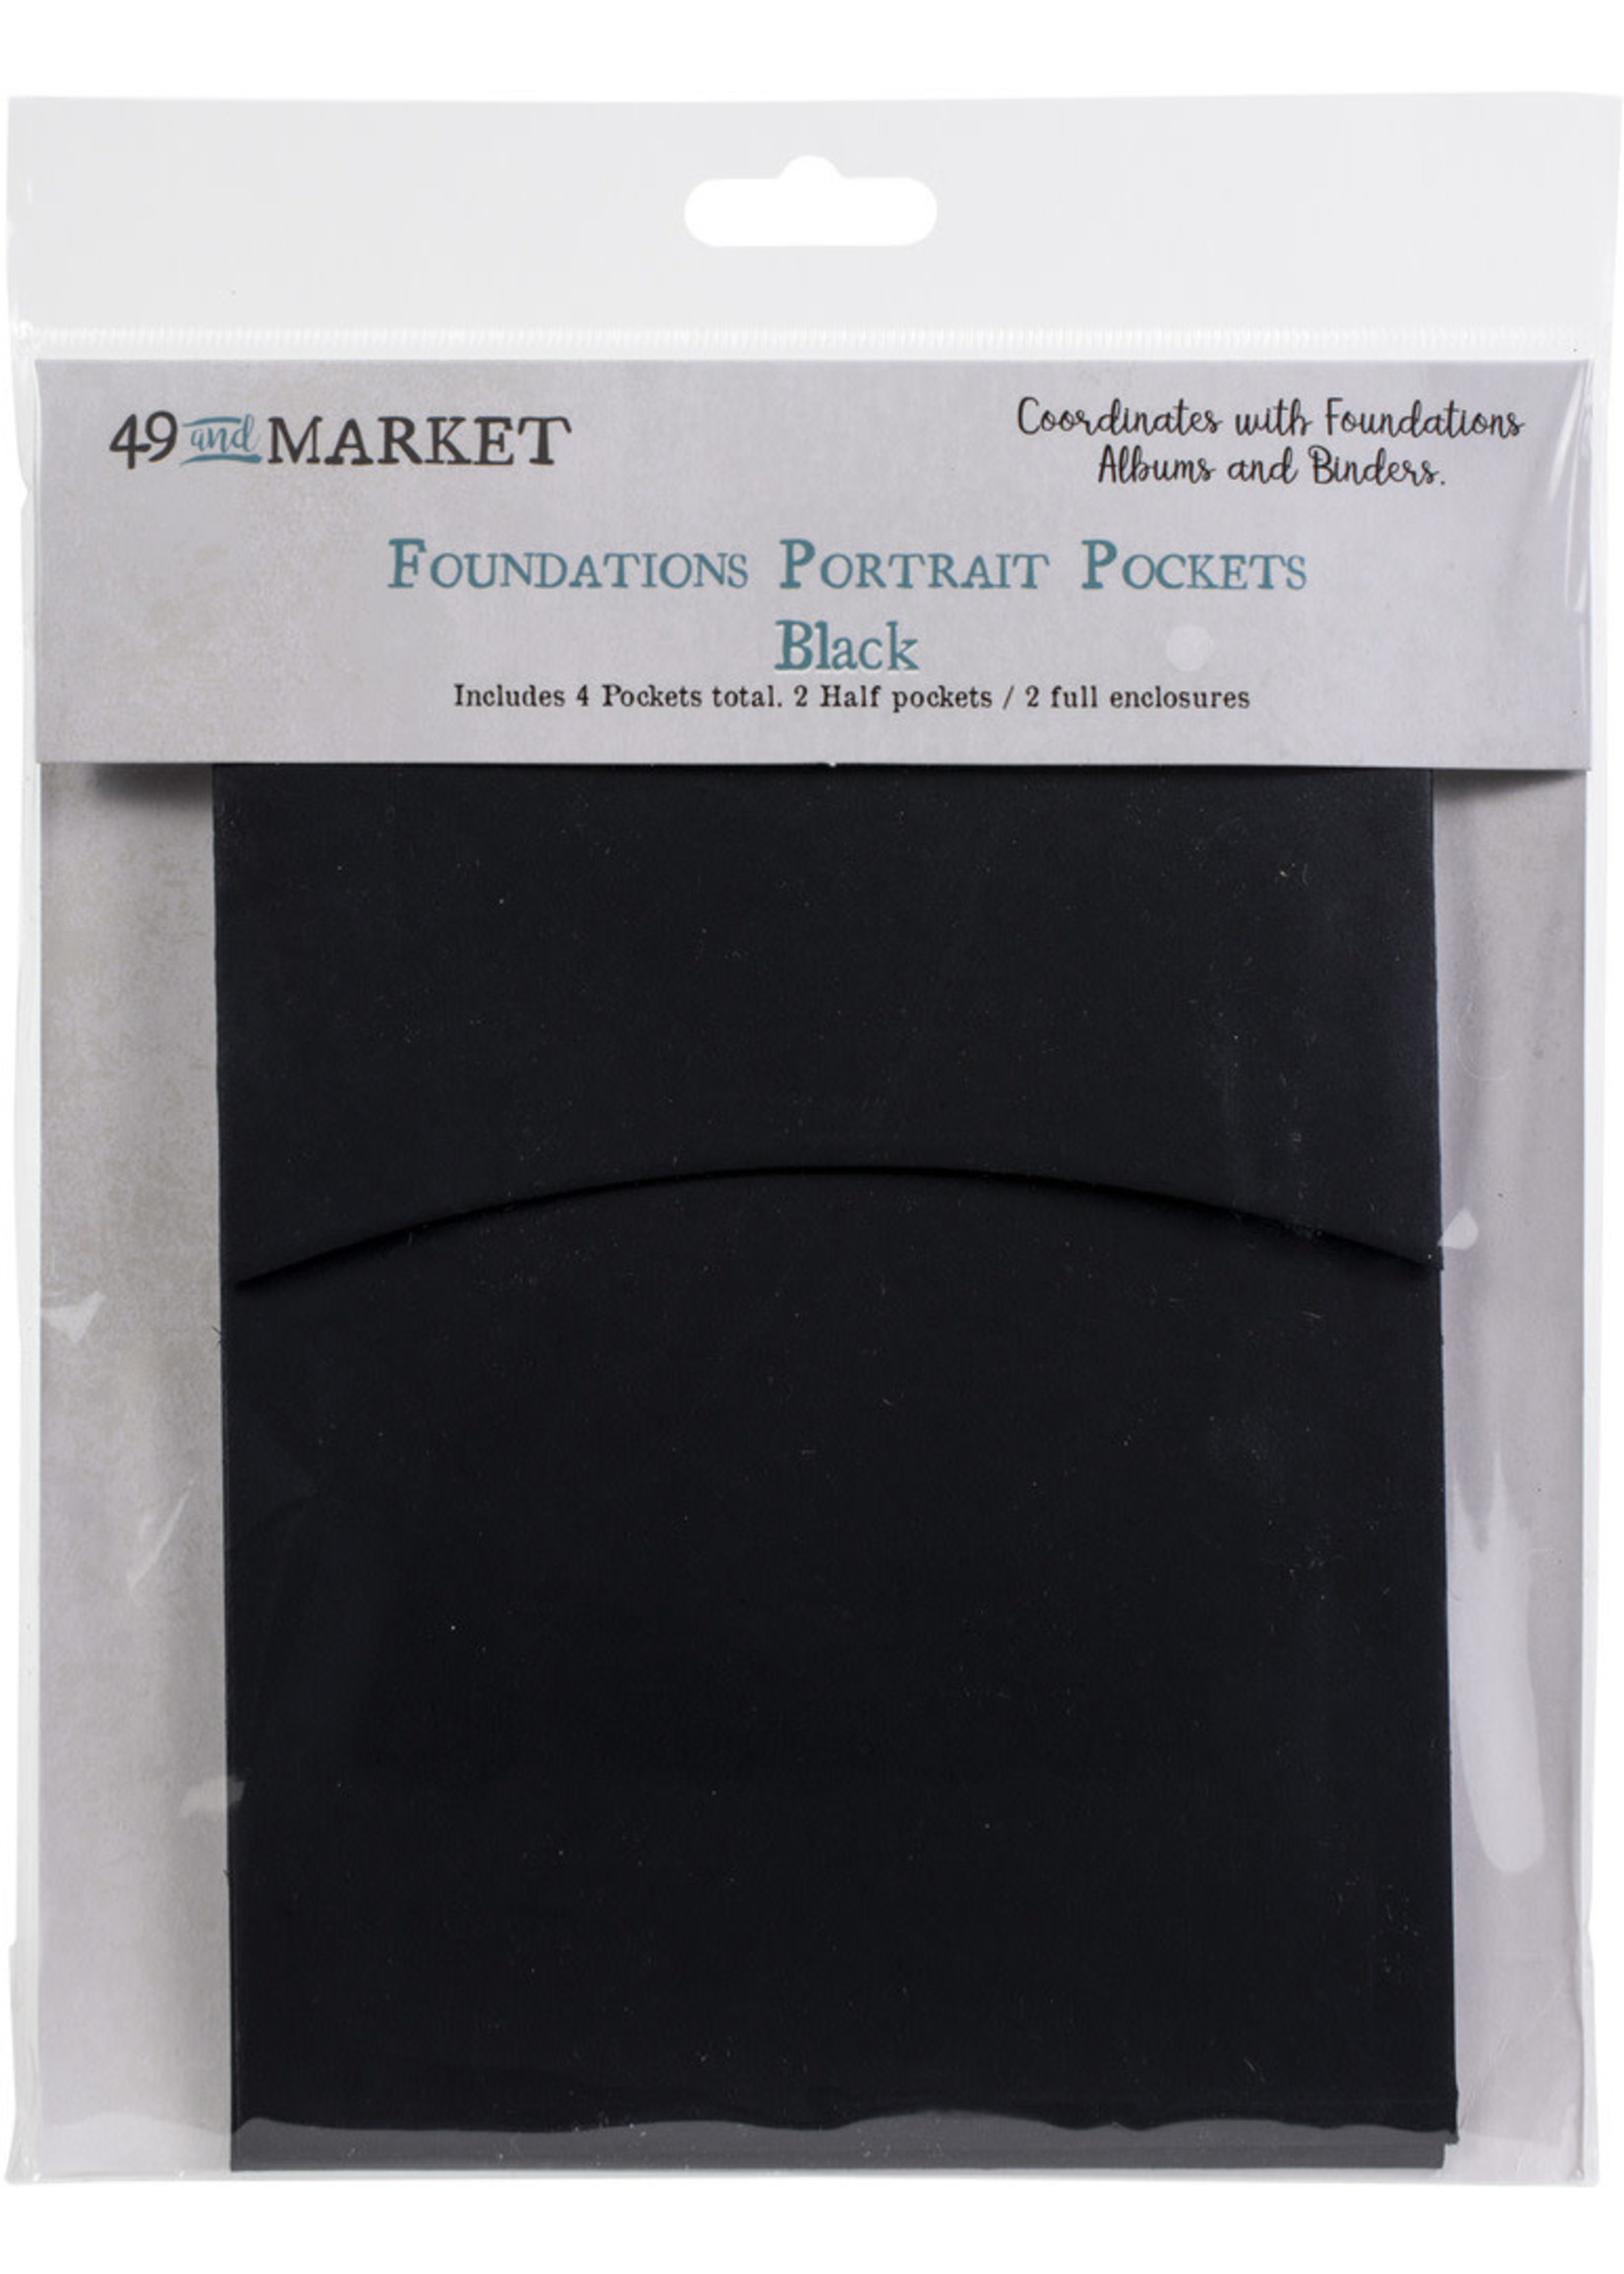 49 & Market 49 & Market Foundations Portrait Pockets, Black